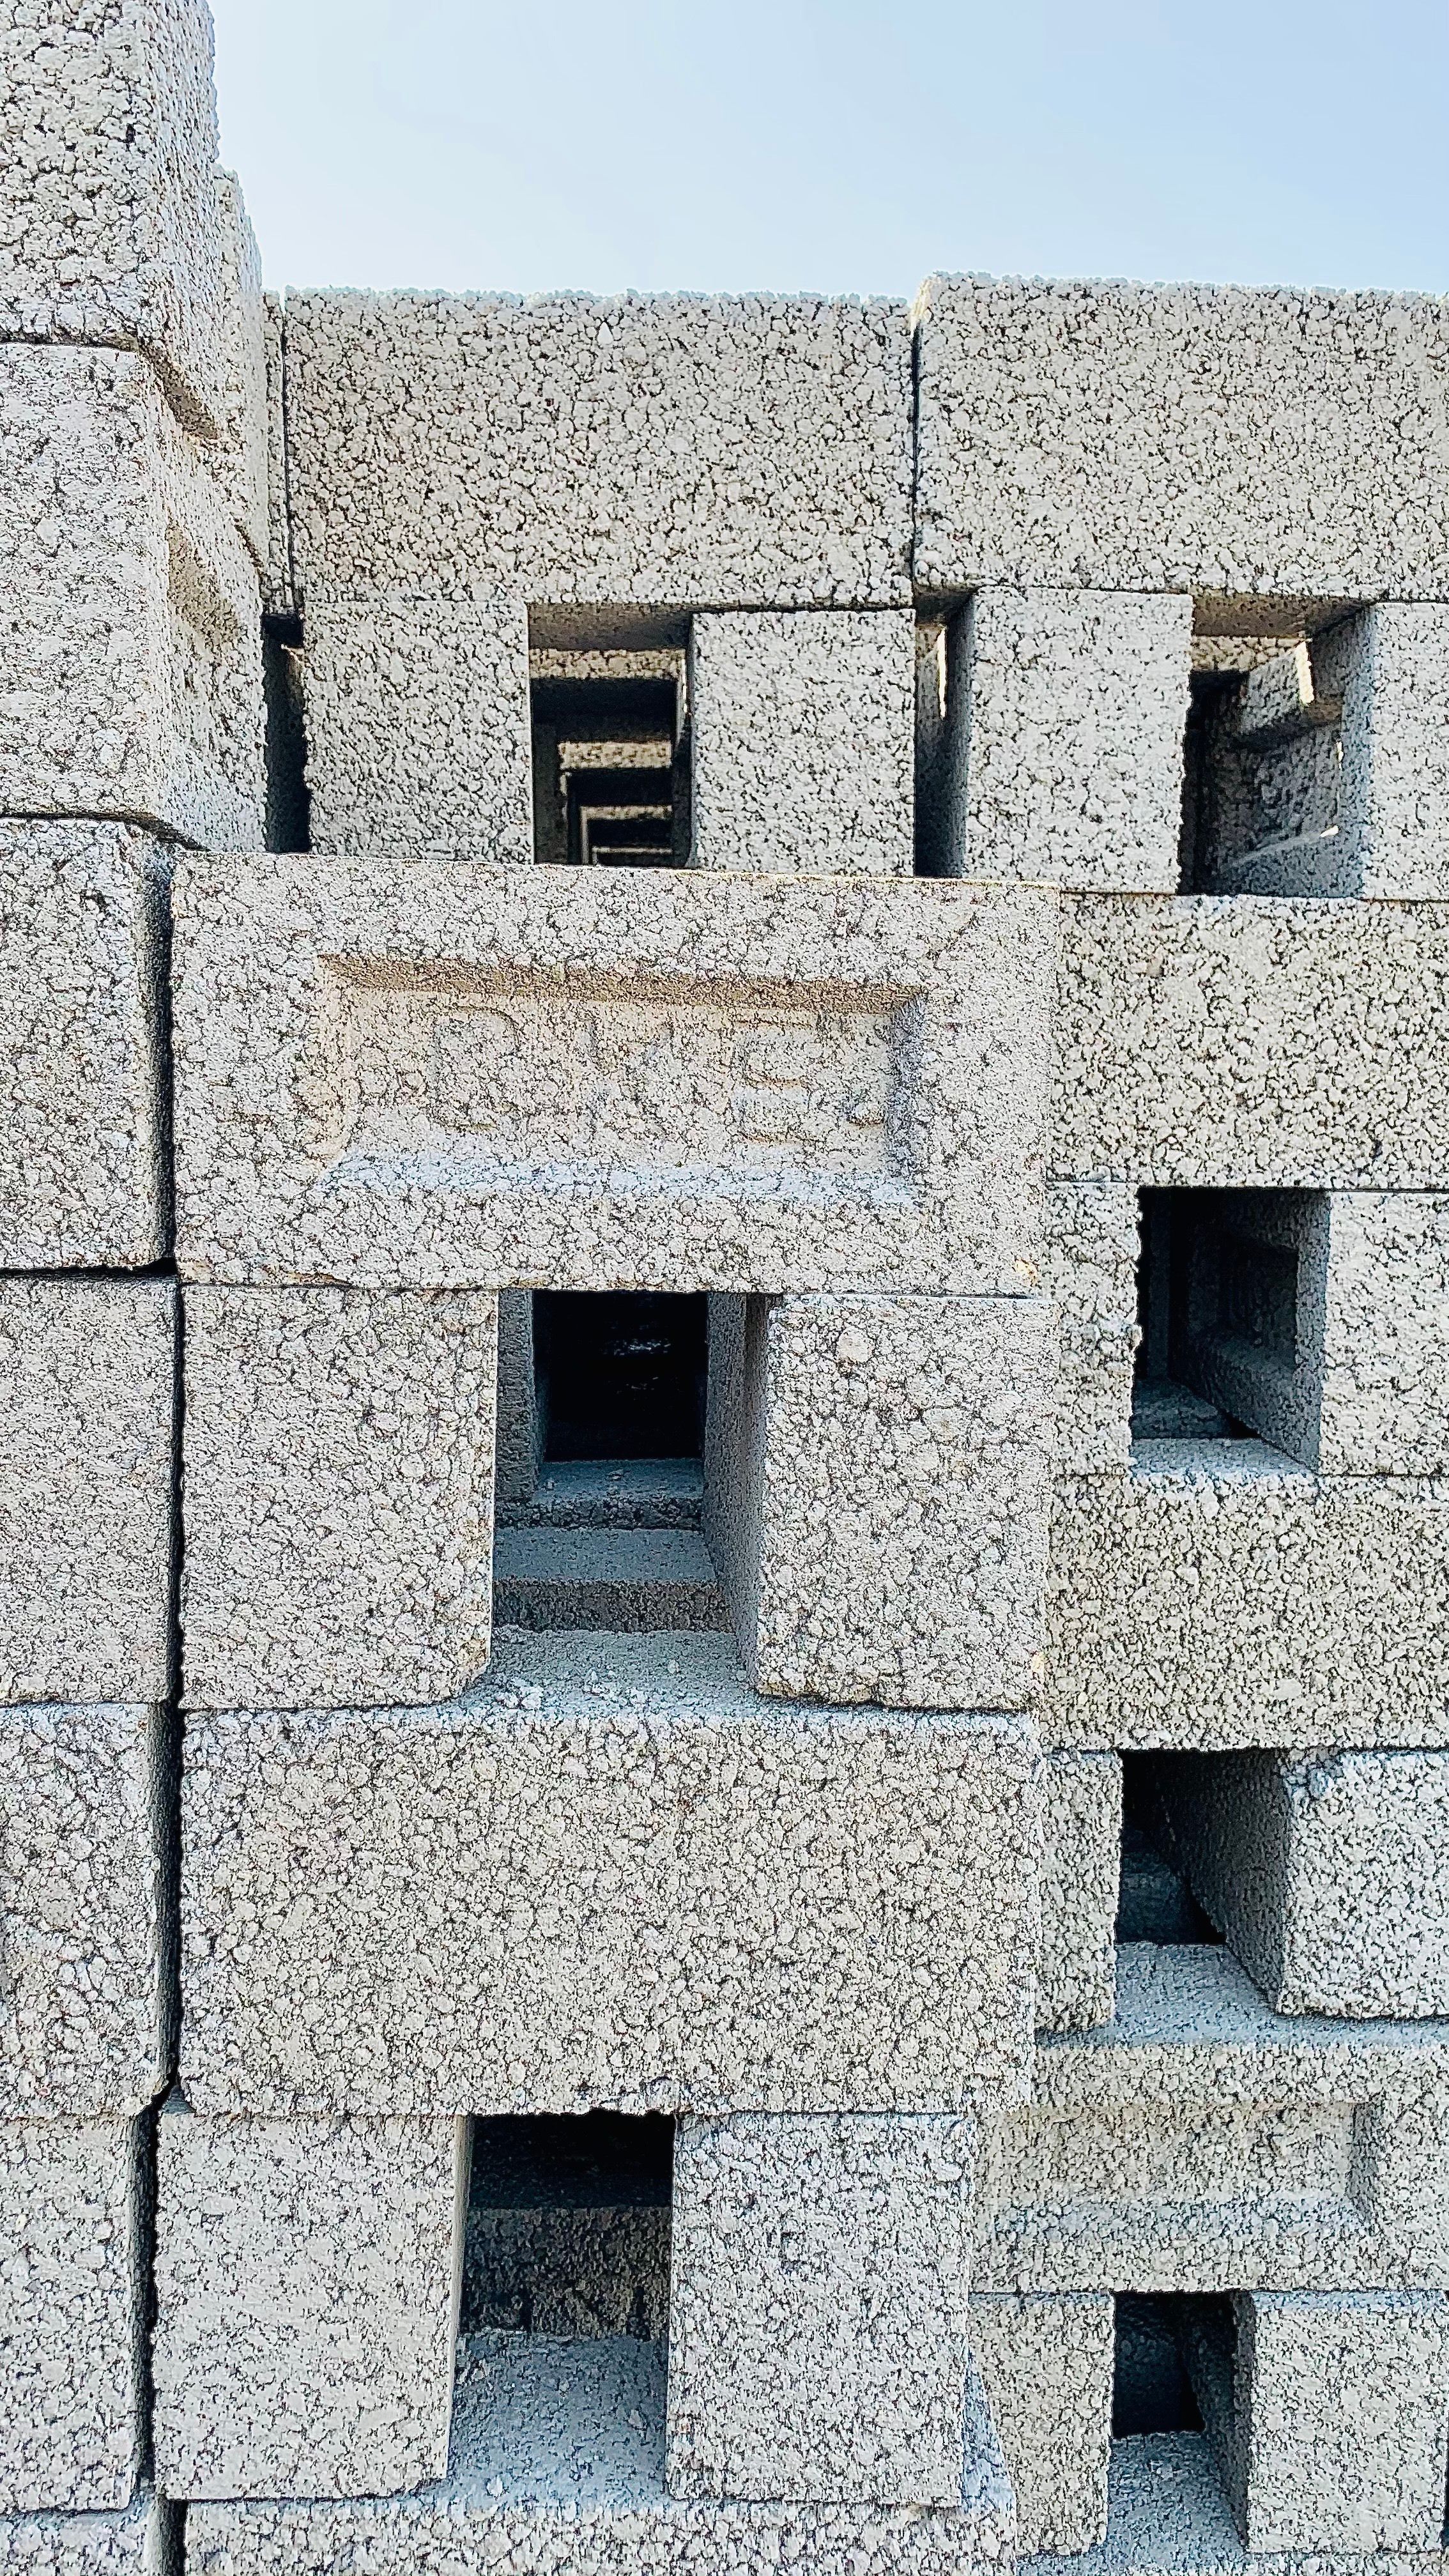 Concrete Bricks